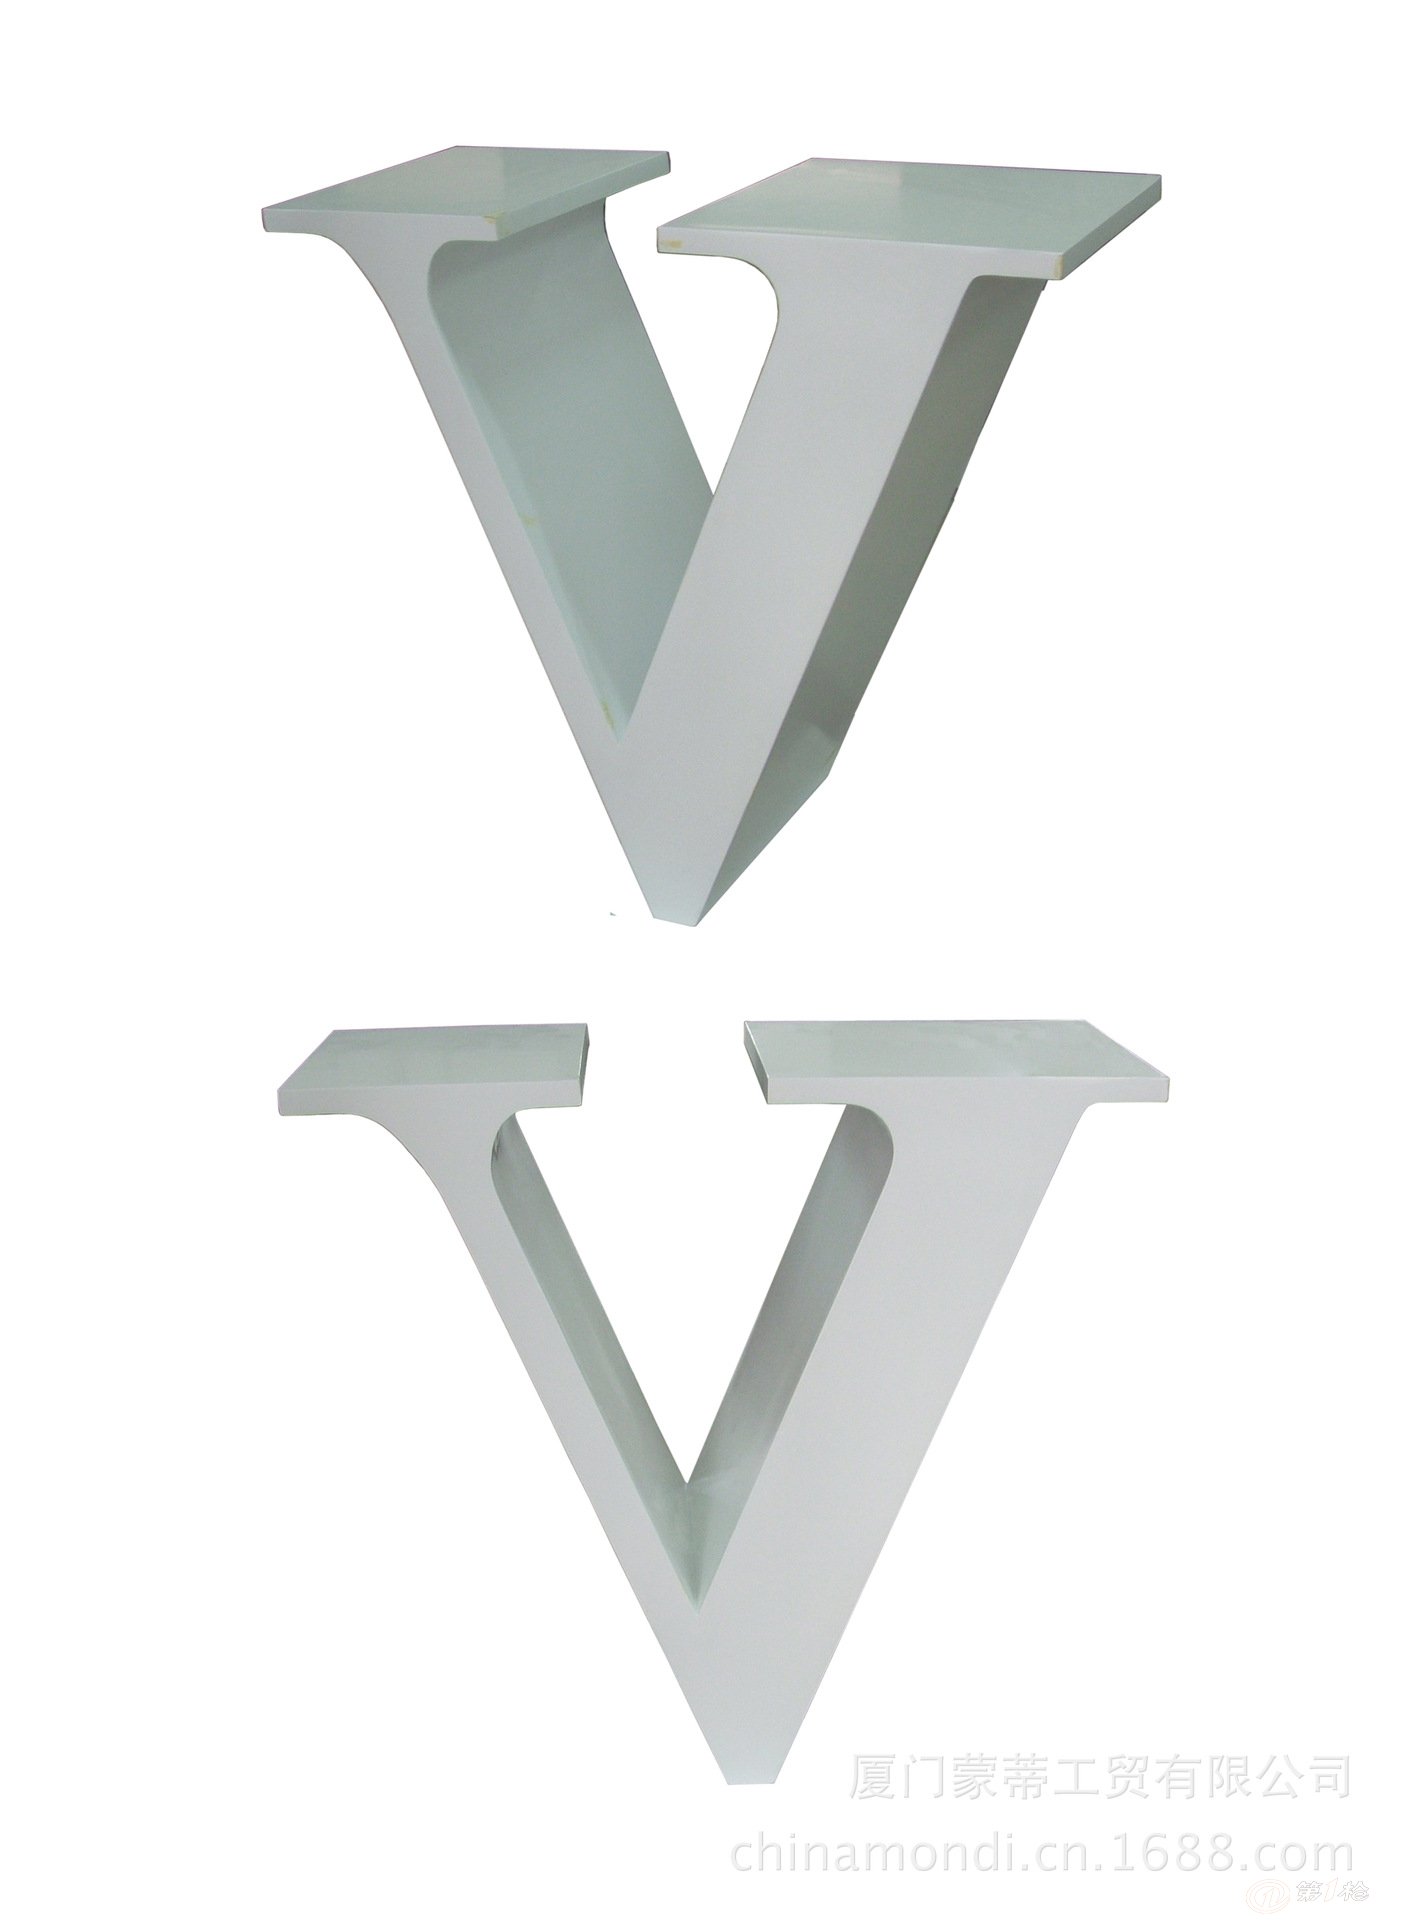 V型